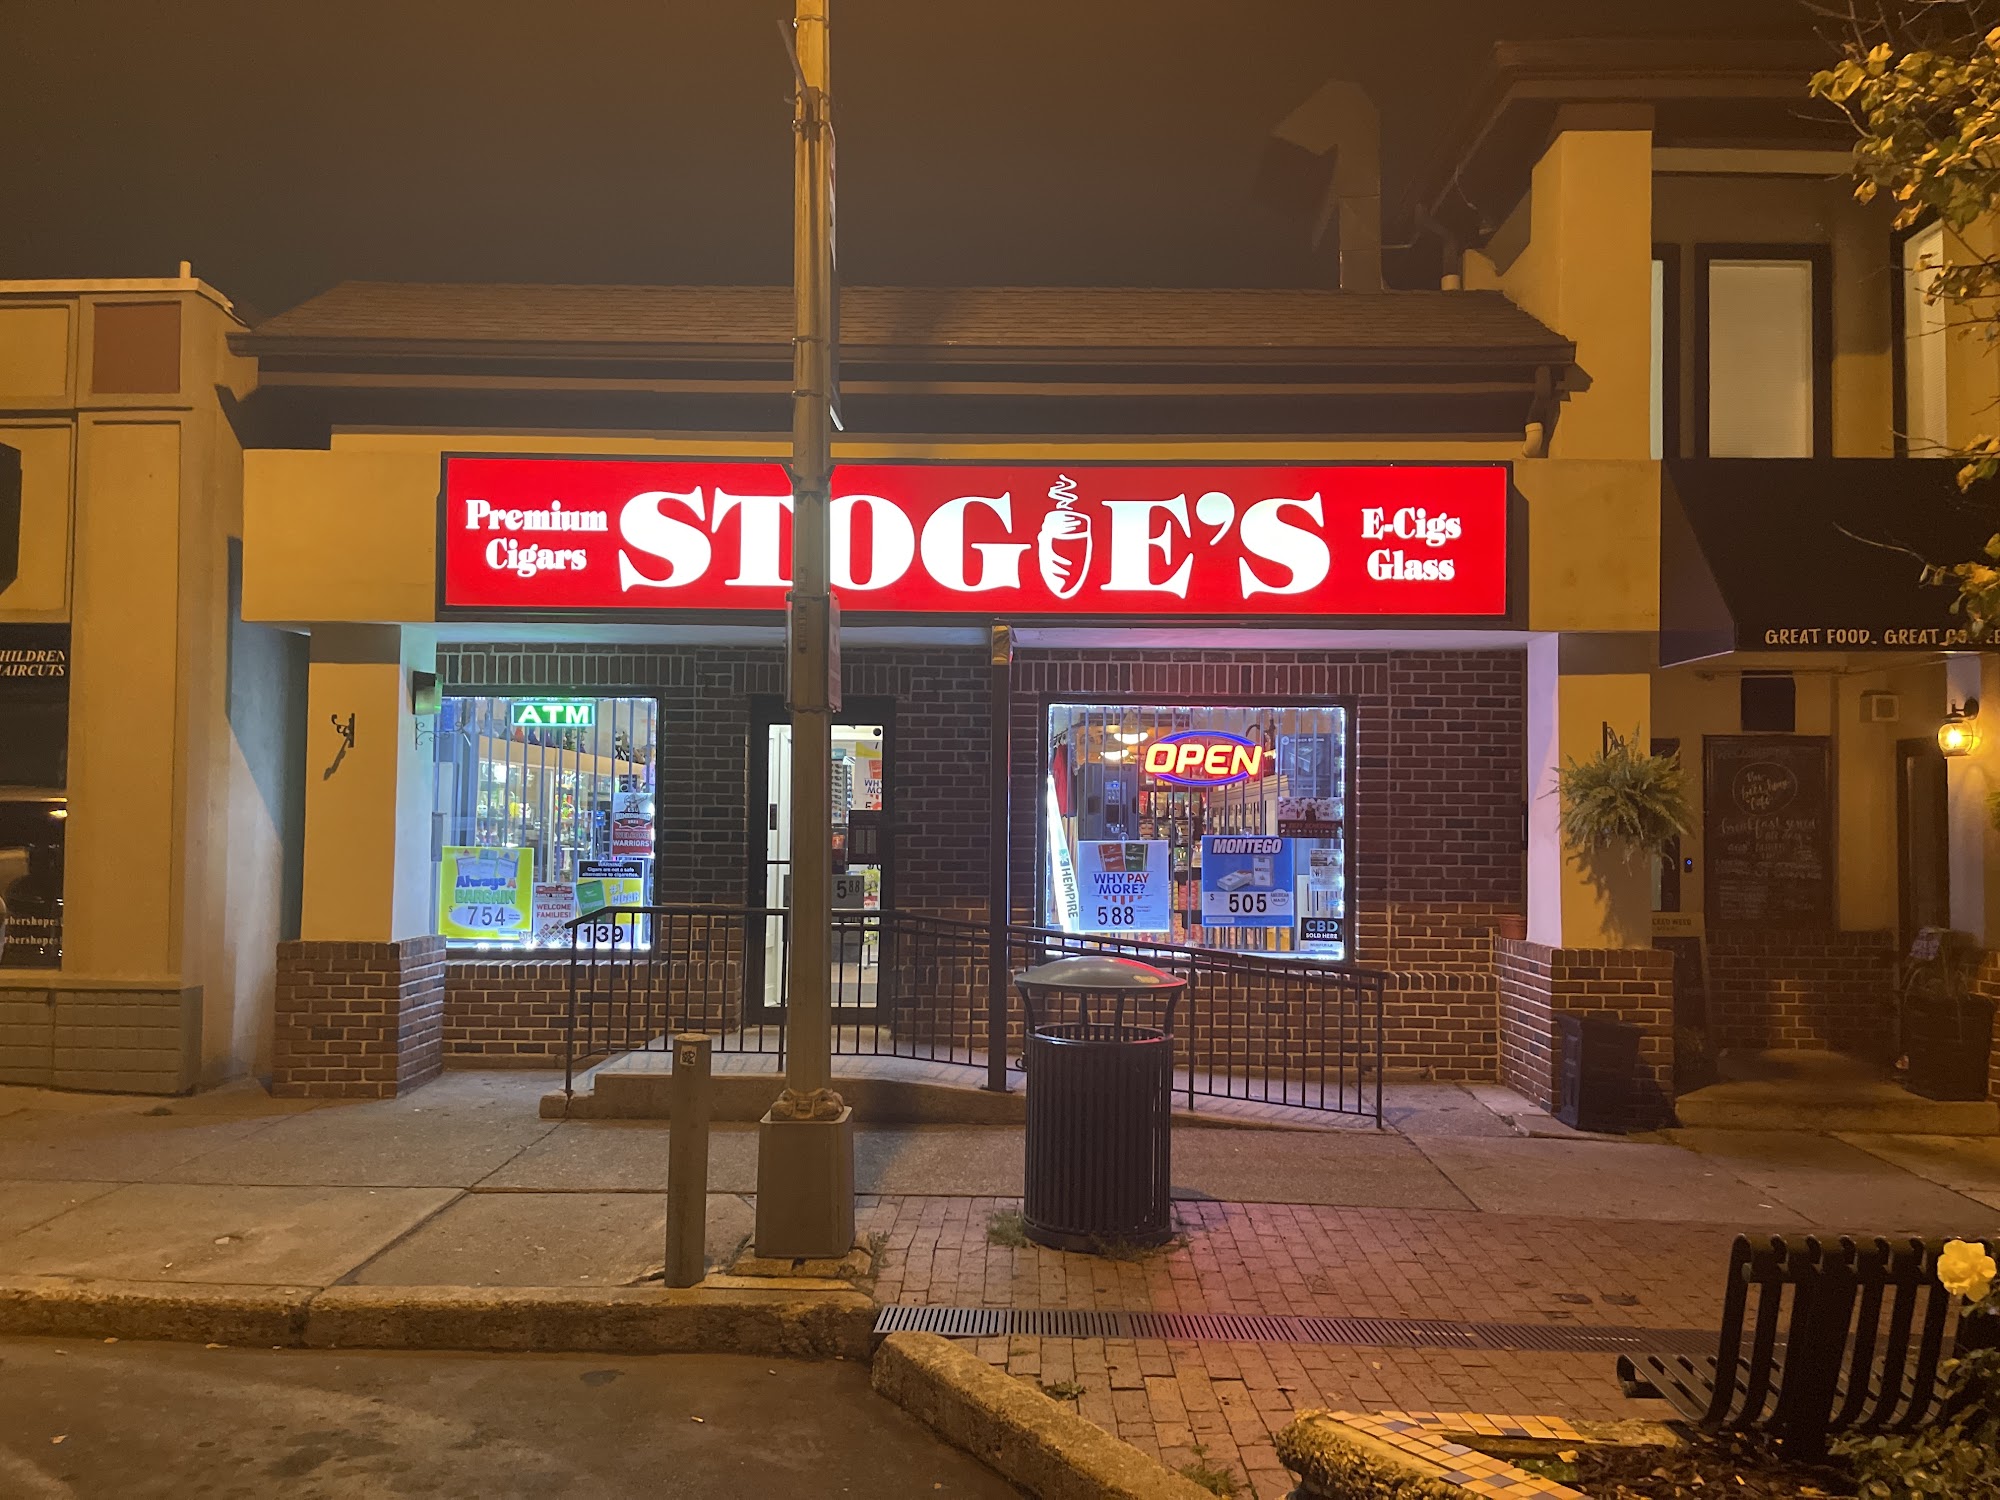 Stogie's